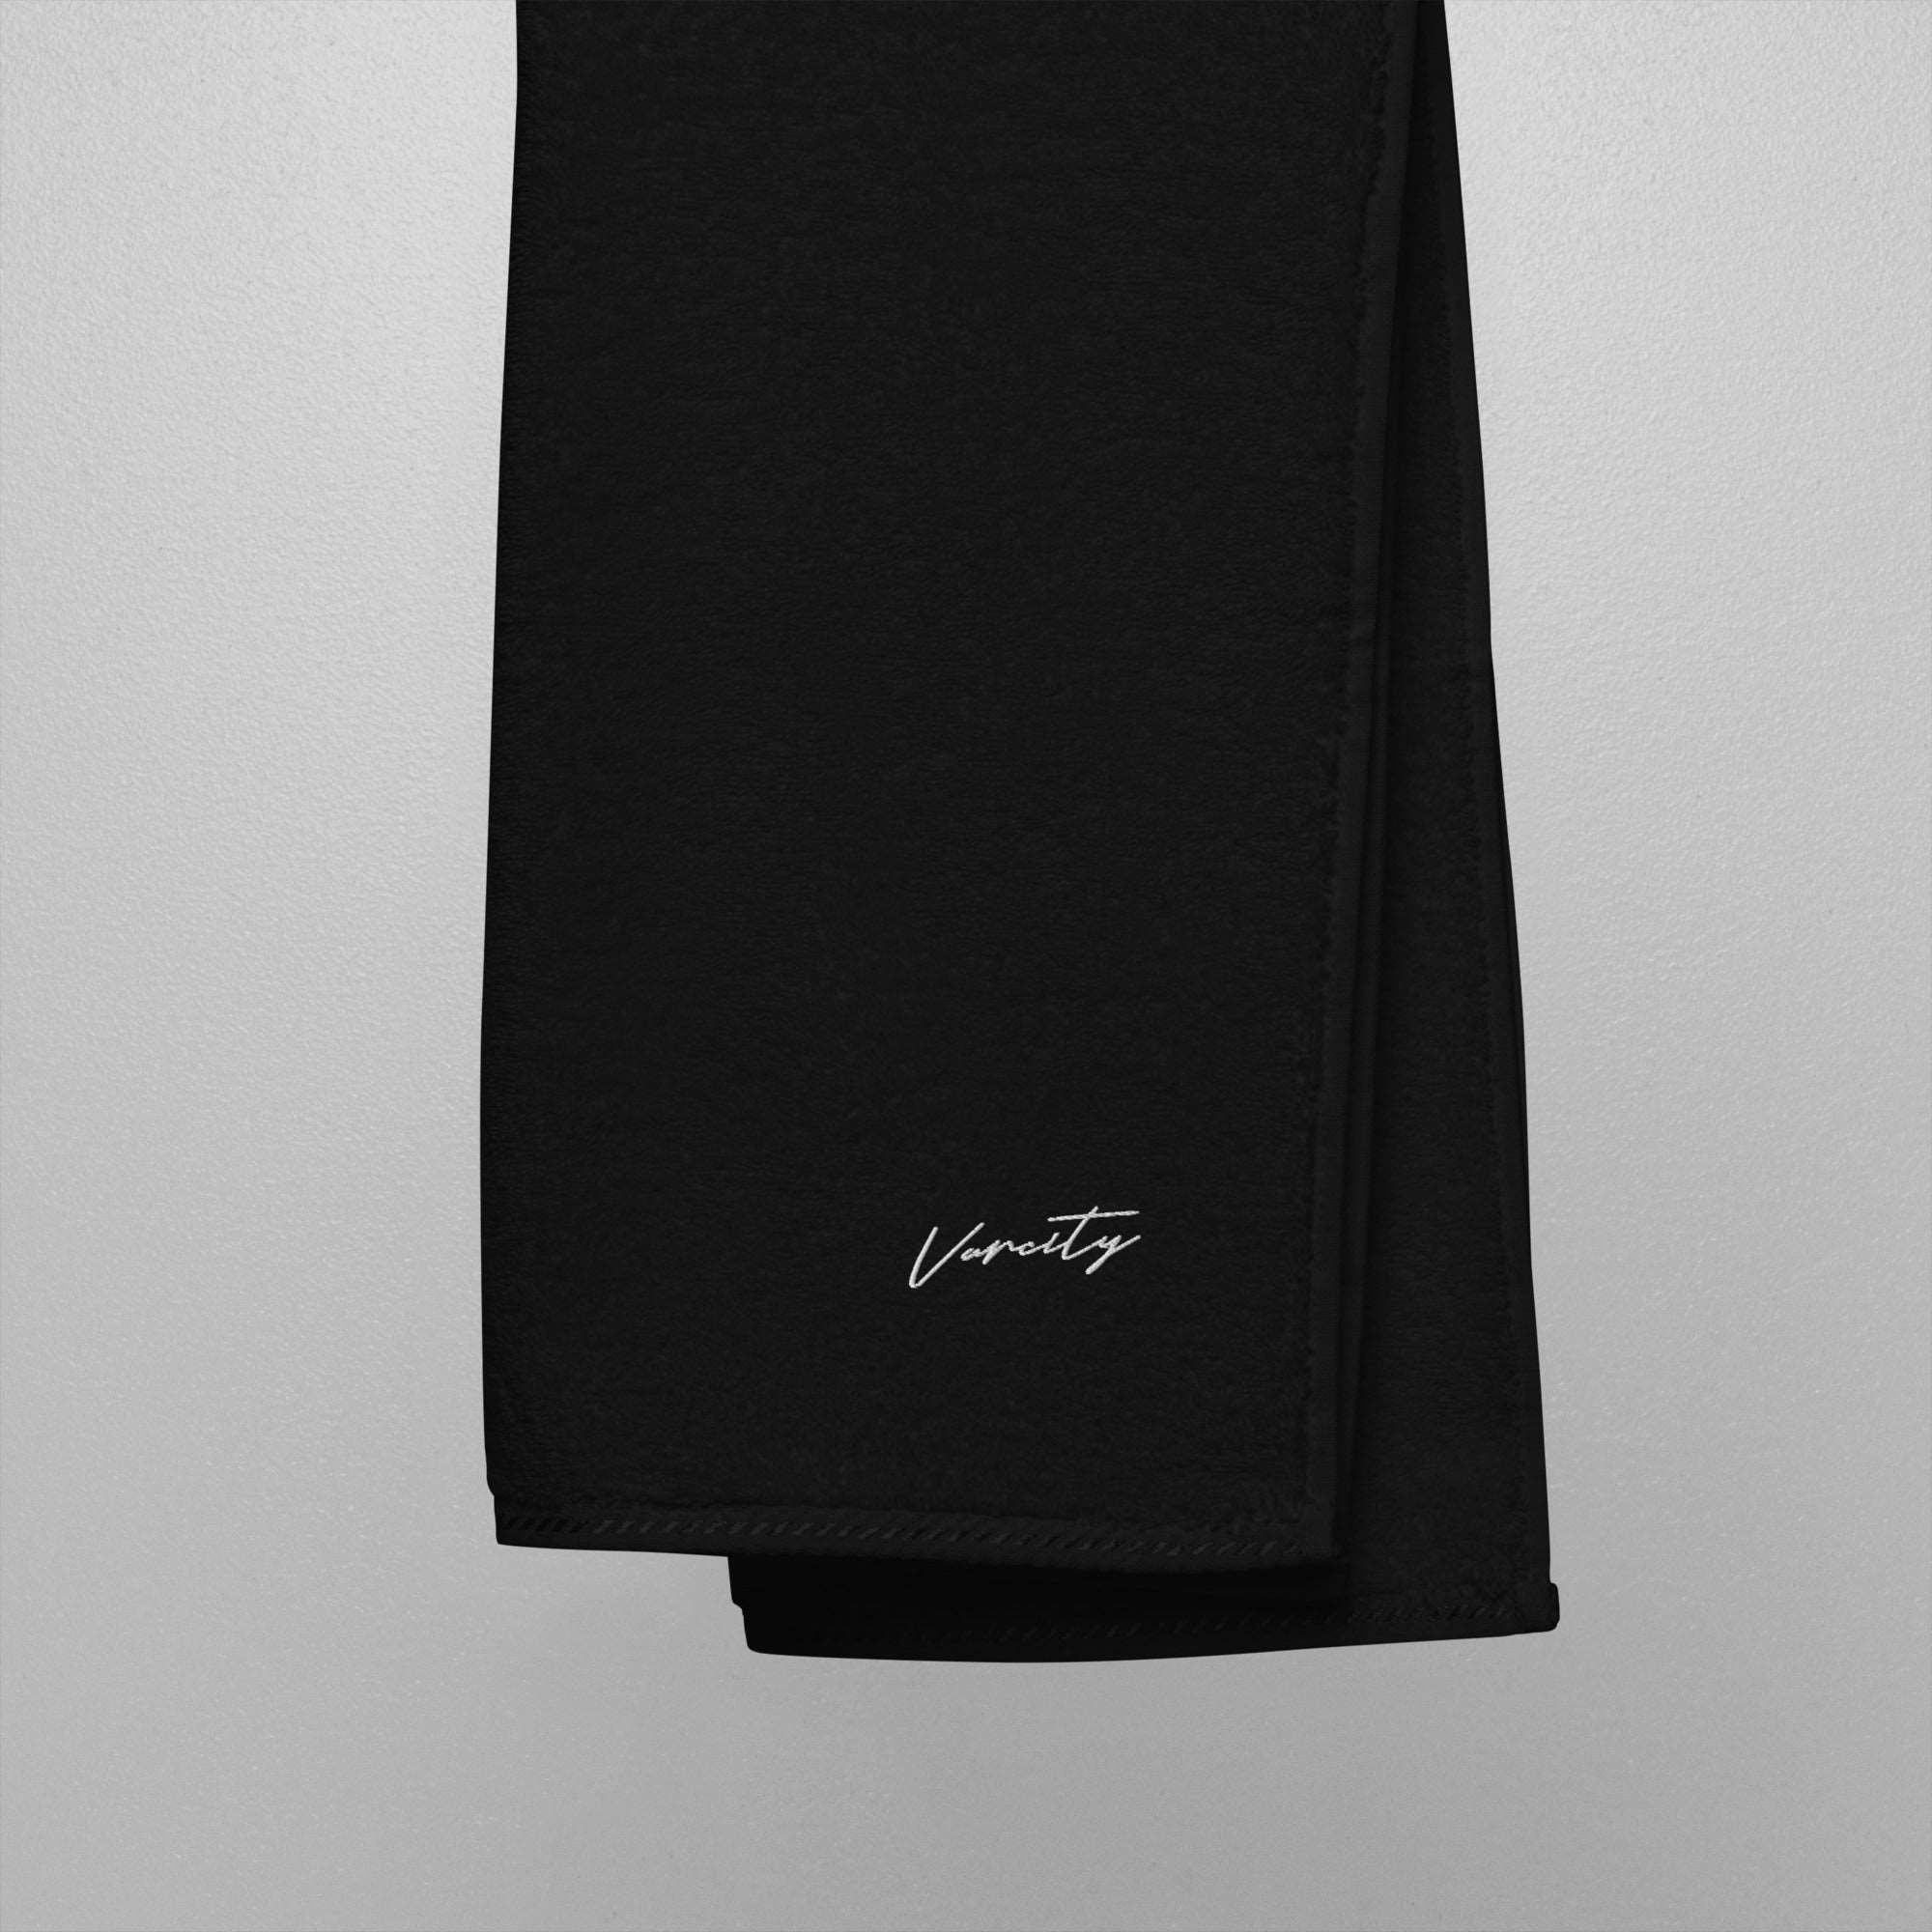 Varcity Unlimited Turkish cotton towel black